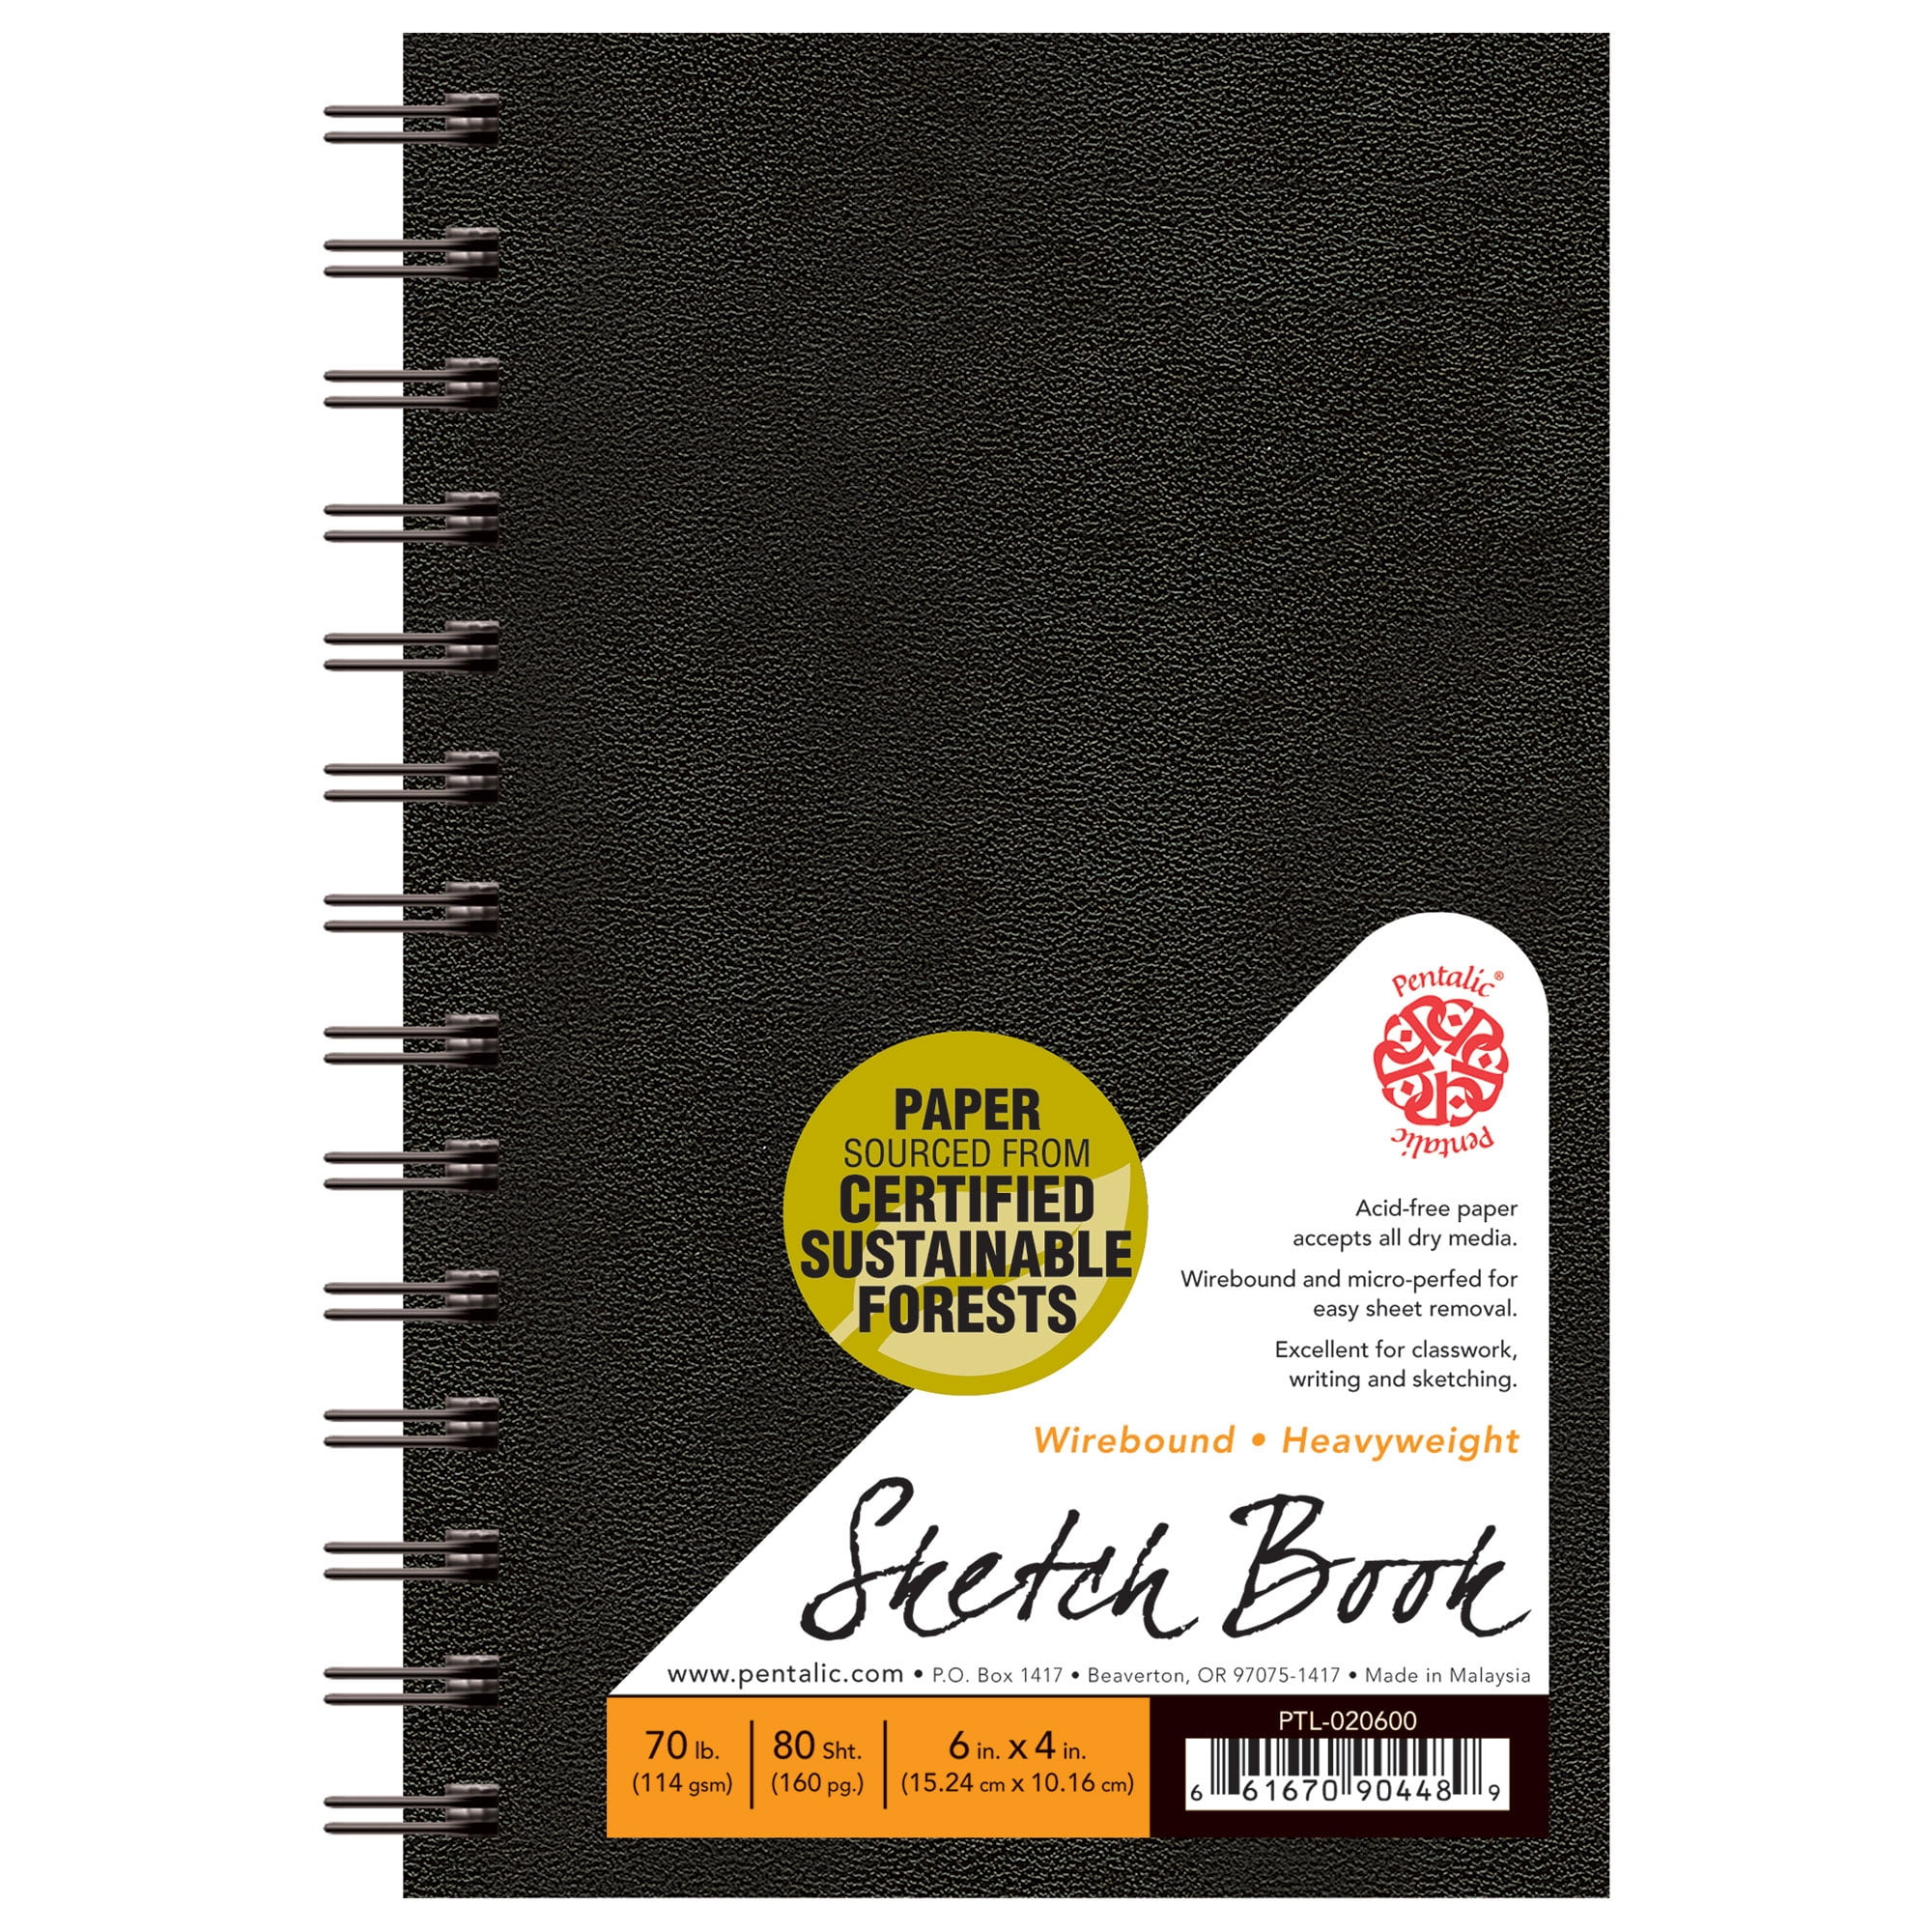 Pentalic 60 lb Utility Soft Cover Sketchbook - 8.5 x 5.5 Inch